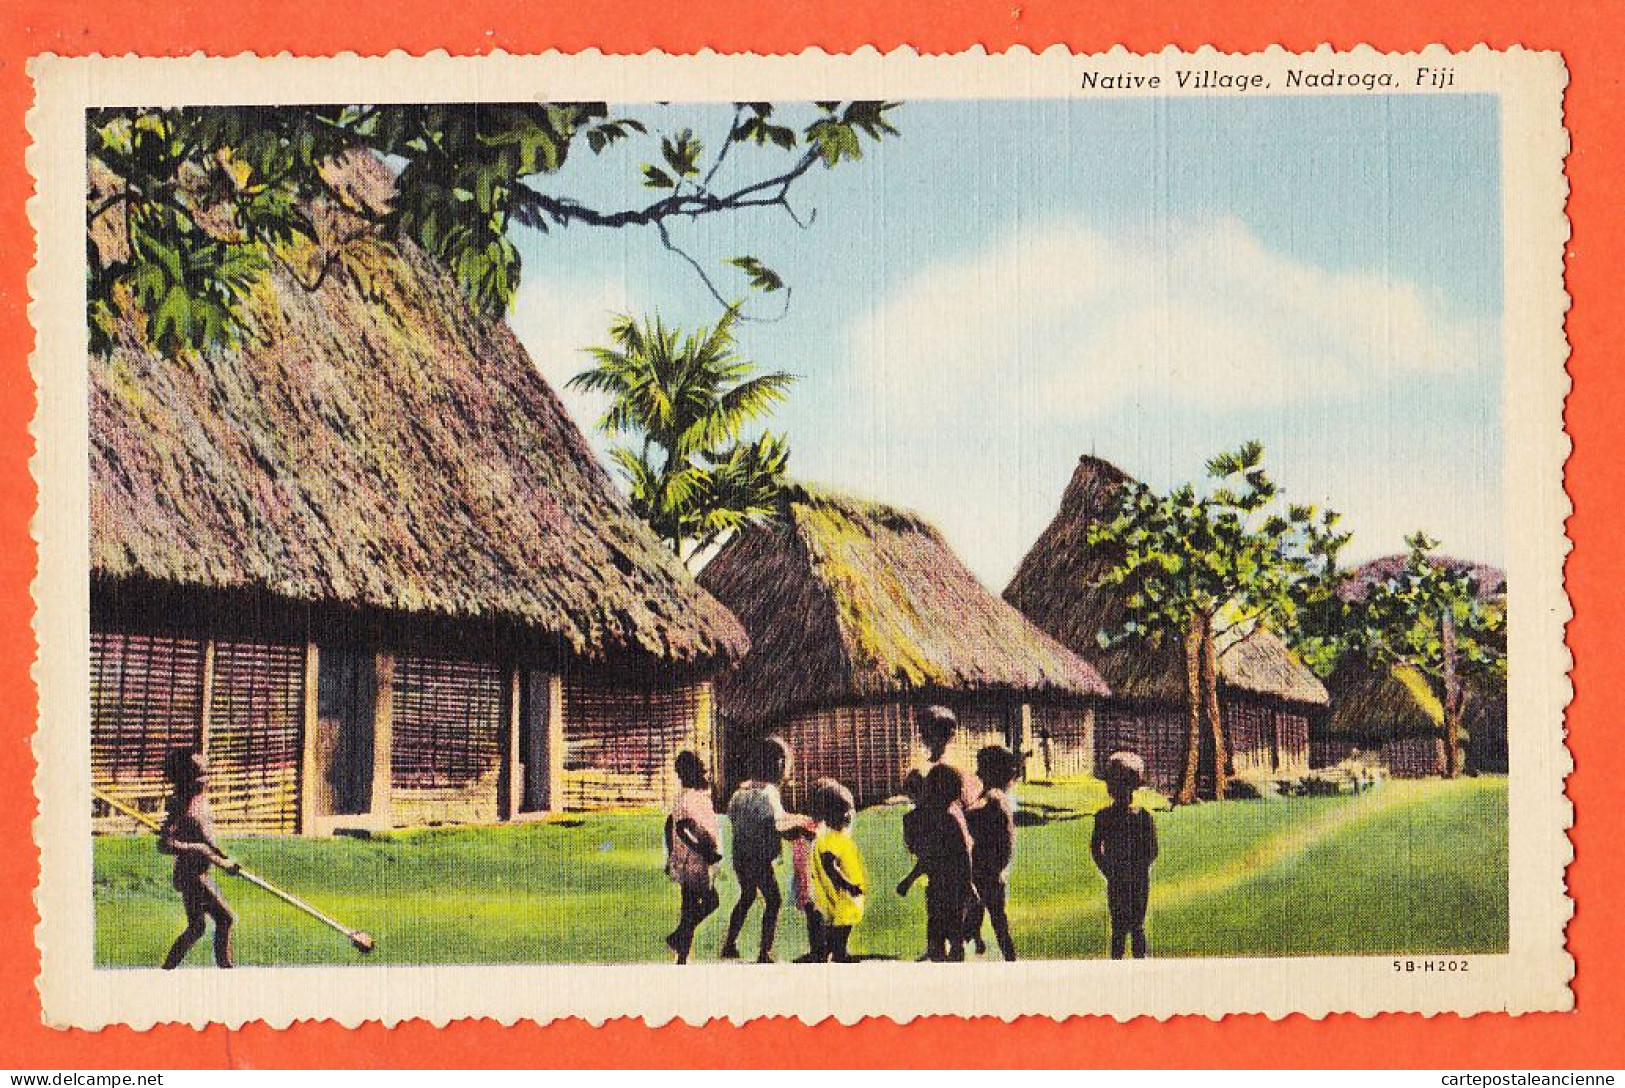 08098 ● ● NADROGA Fiji Native Village 1930s Fidji 5B-H202 - Figi